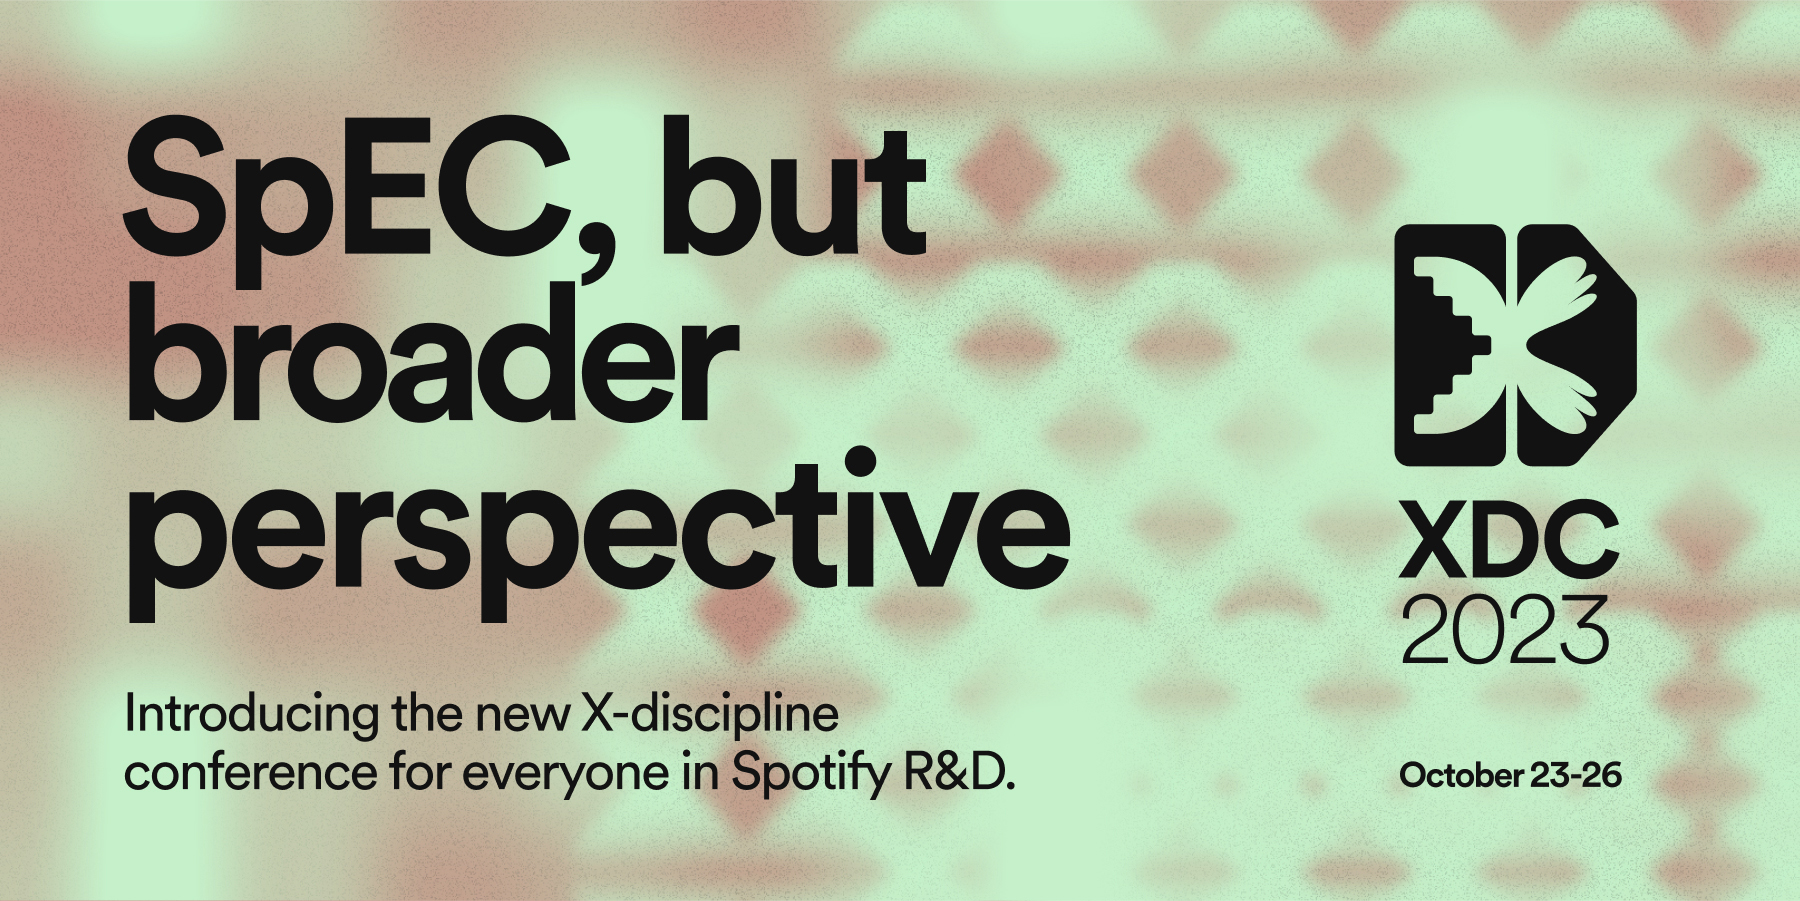 Spotify XDC 2023 logo and communications design